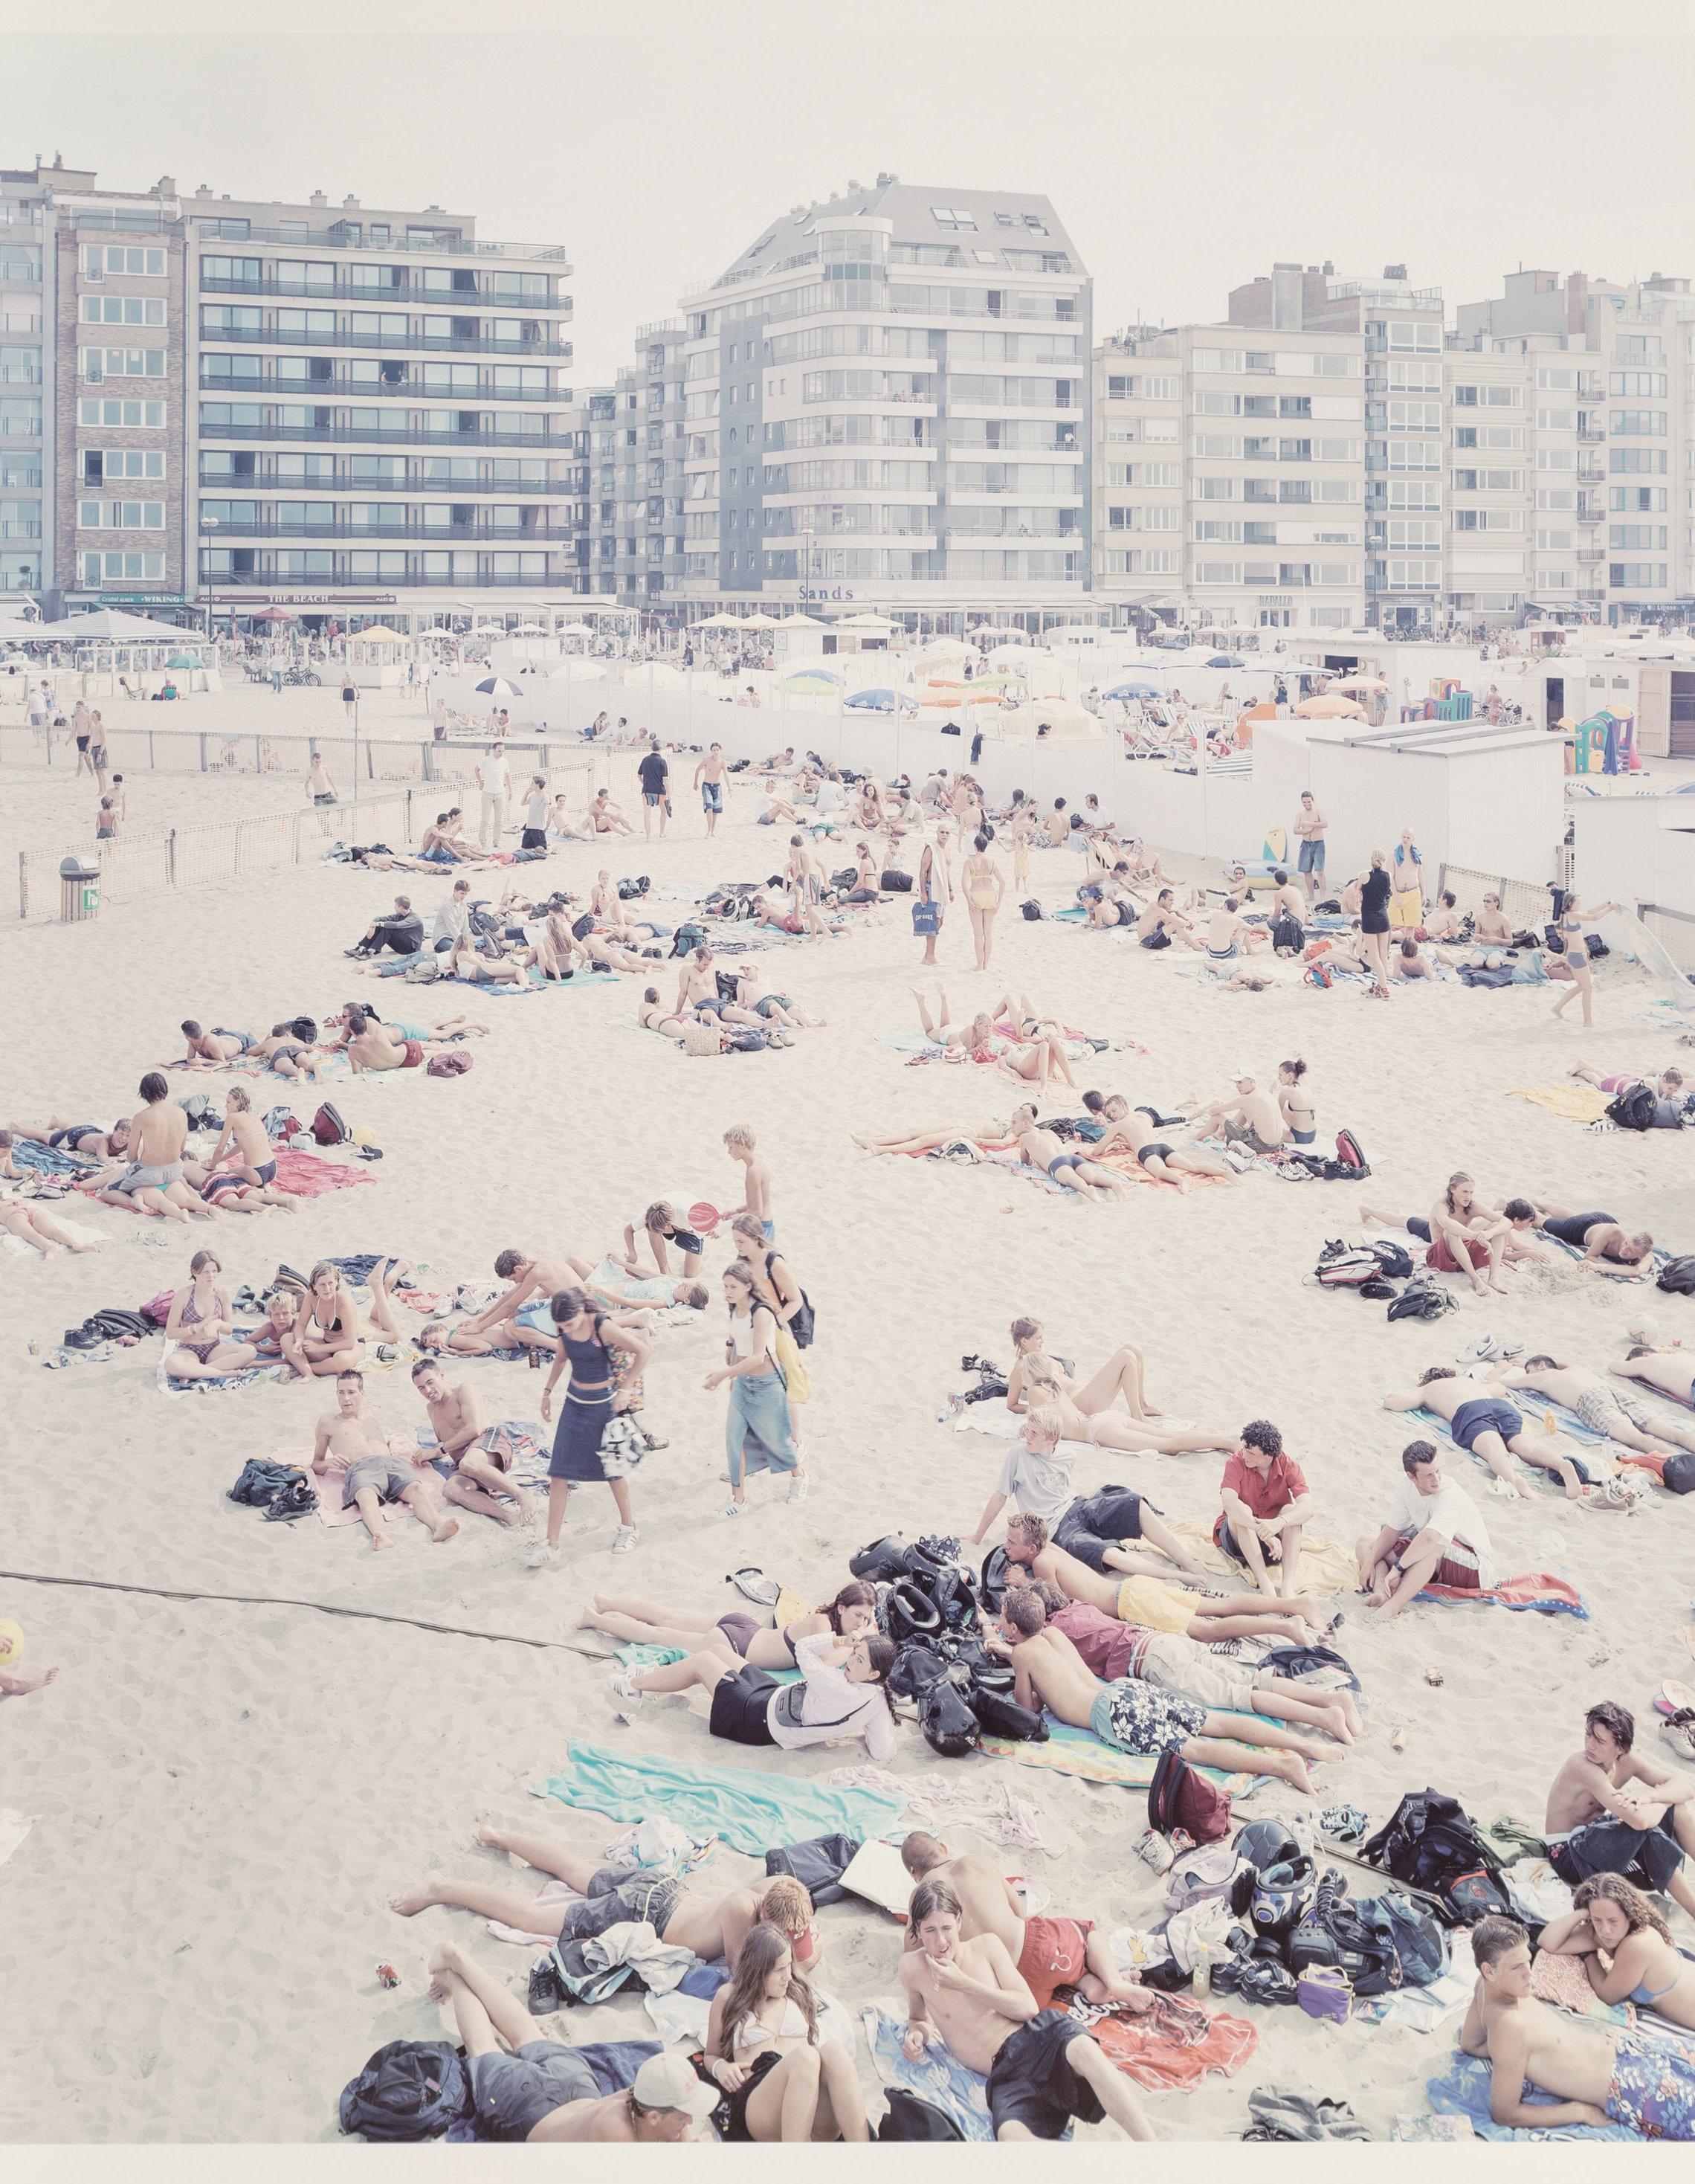 Massimo Vitali 'Knokke Beach' Artist's Proof Limited Edition Print